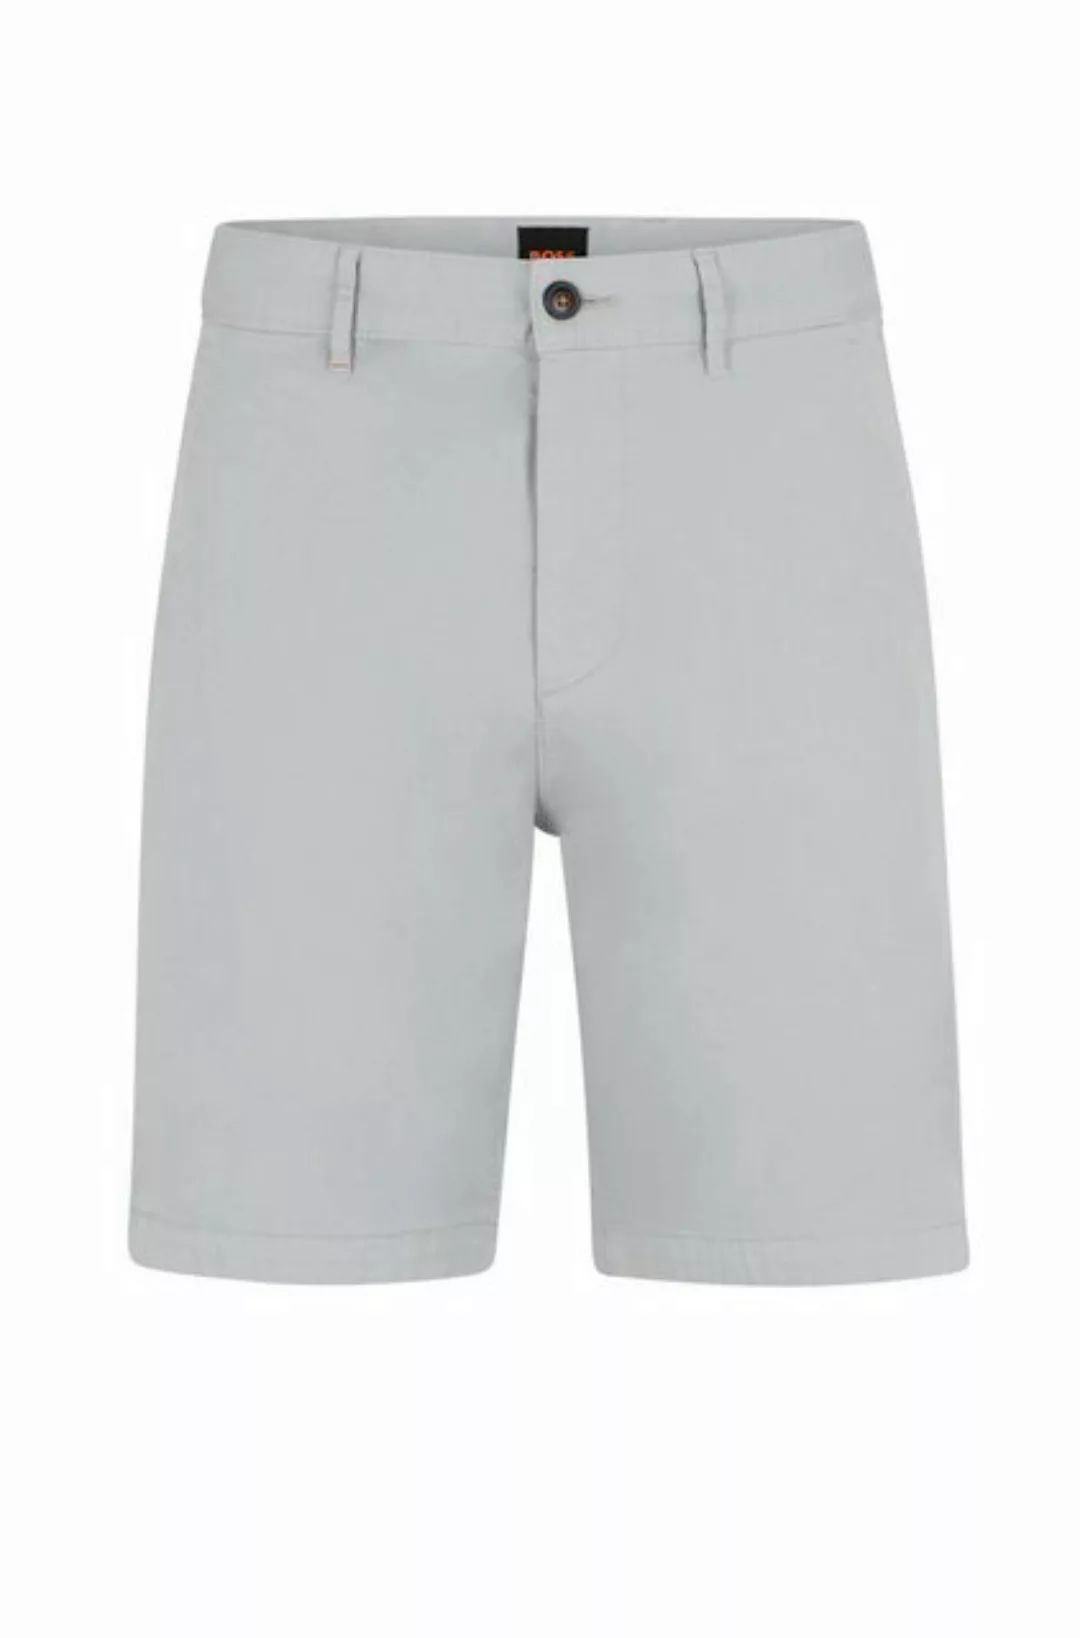 BOSS ORANGE Stoffhose Chino-slim-Shorts 10248647 01, Light/Pastel Grey günstig online kaufen